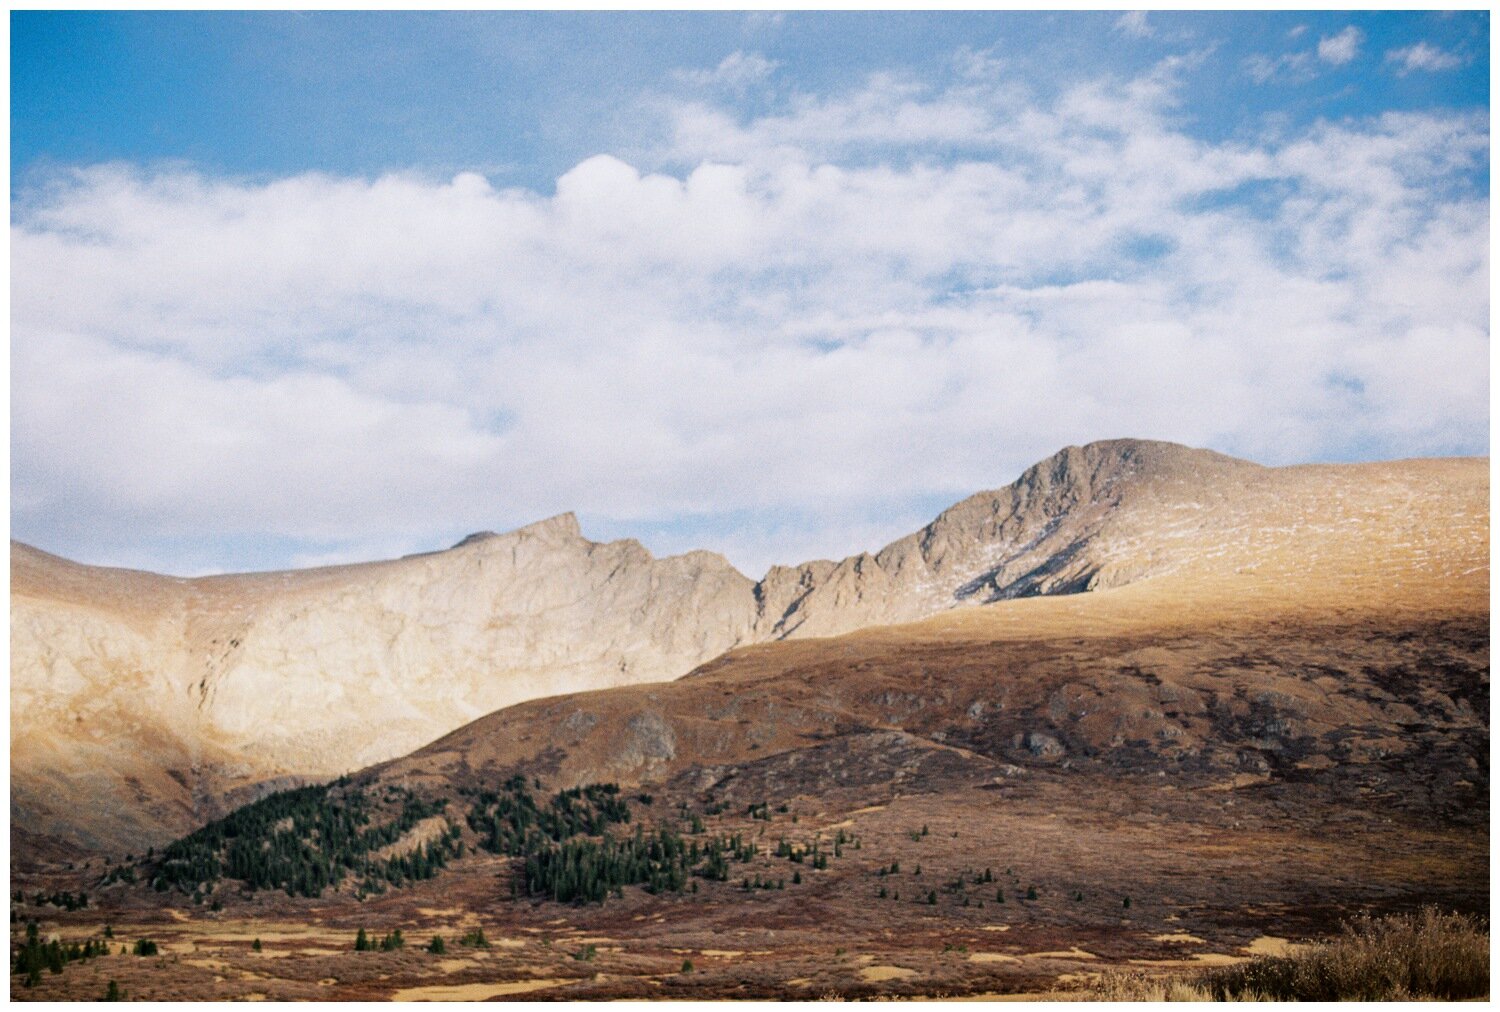 Mt Evans Wilderness Colorado .jpg